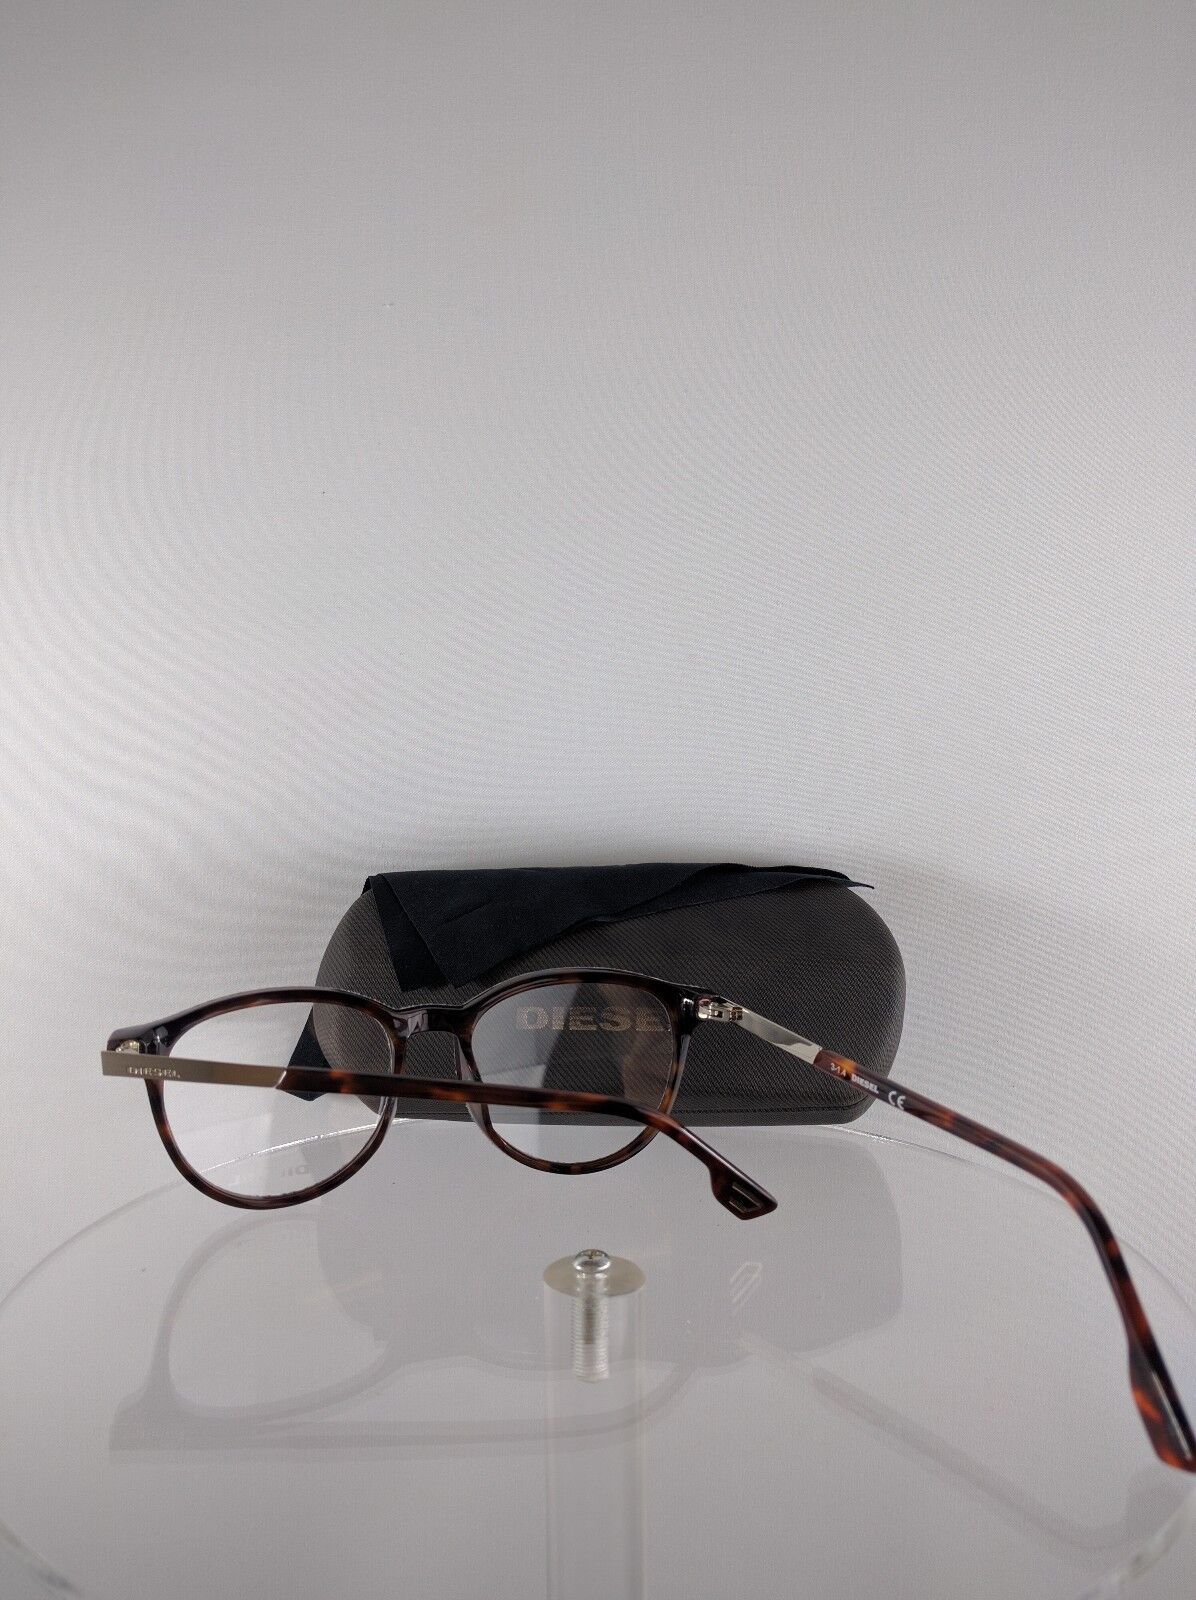 100% Authentic Brand New Diesel Eyeglasses DL 5117-F Color 056 Denim DL5117